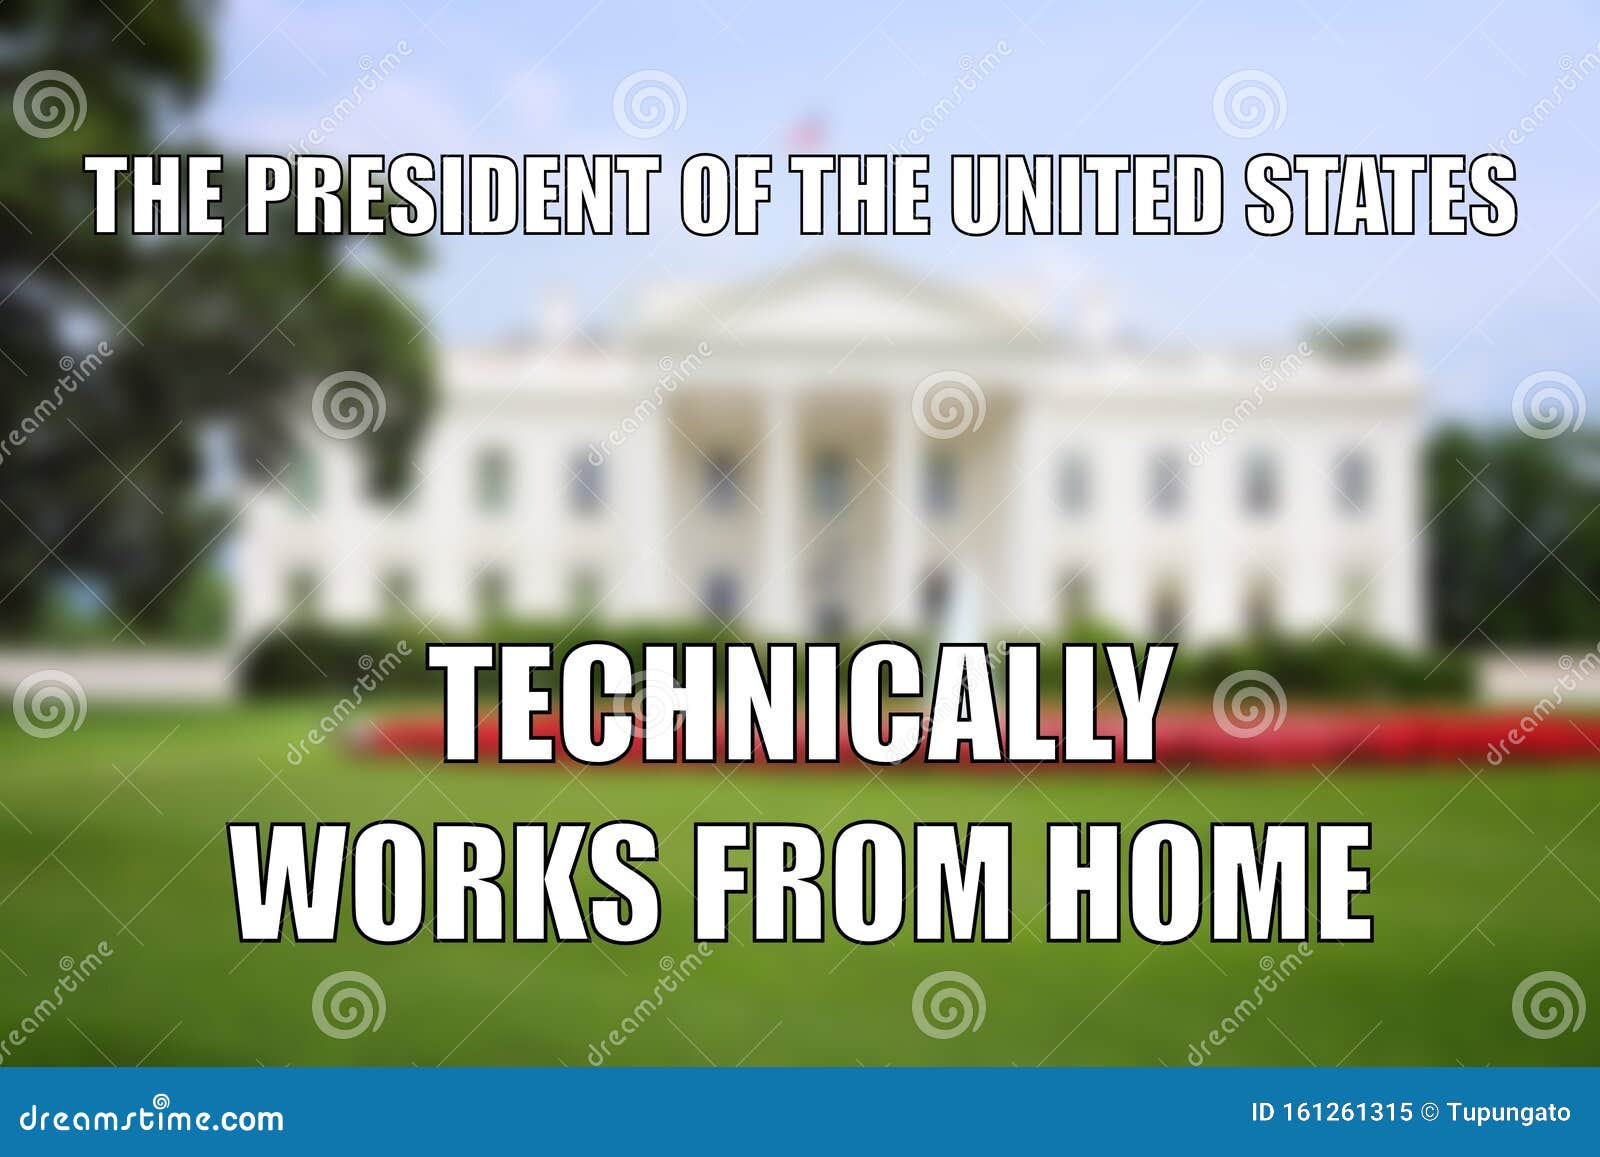 USA funny meme stock image. Image of work, social, states - 161261315